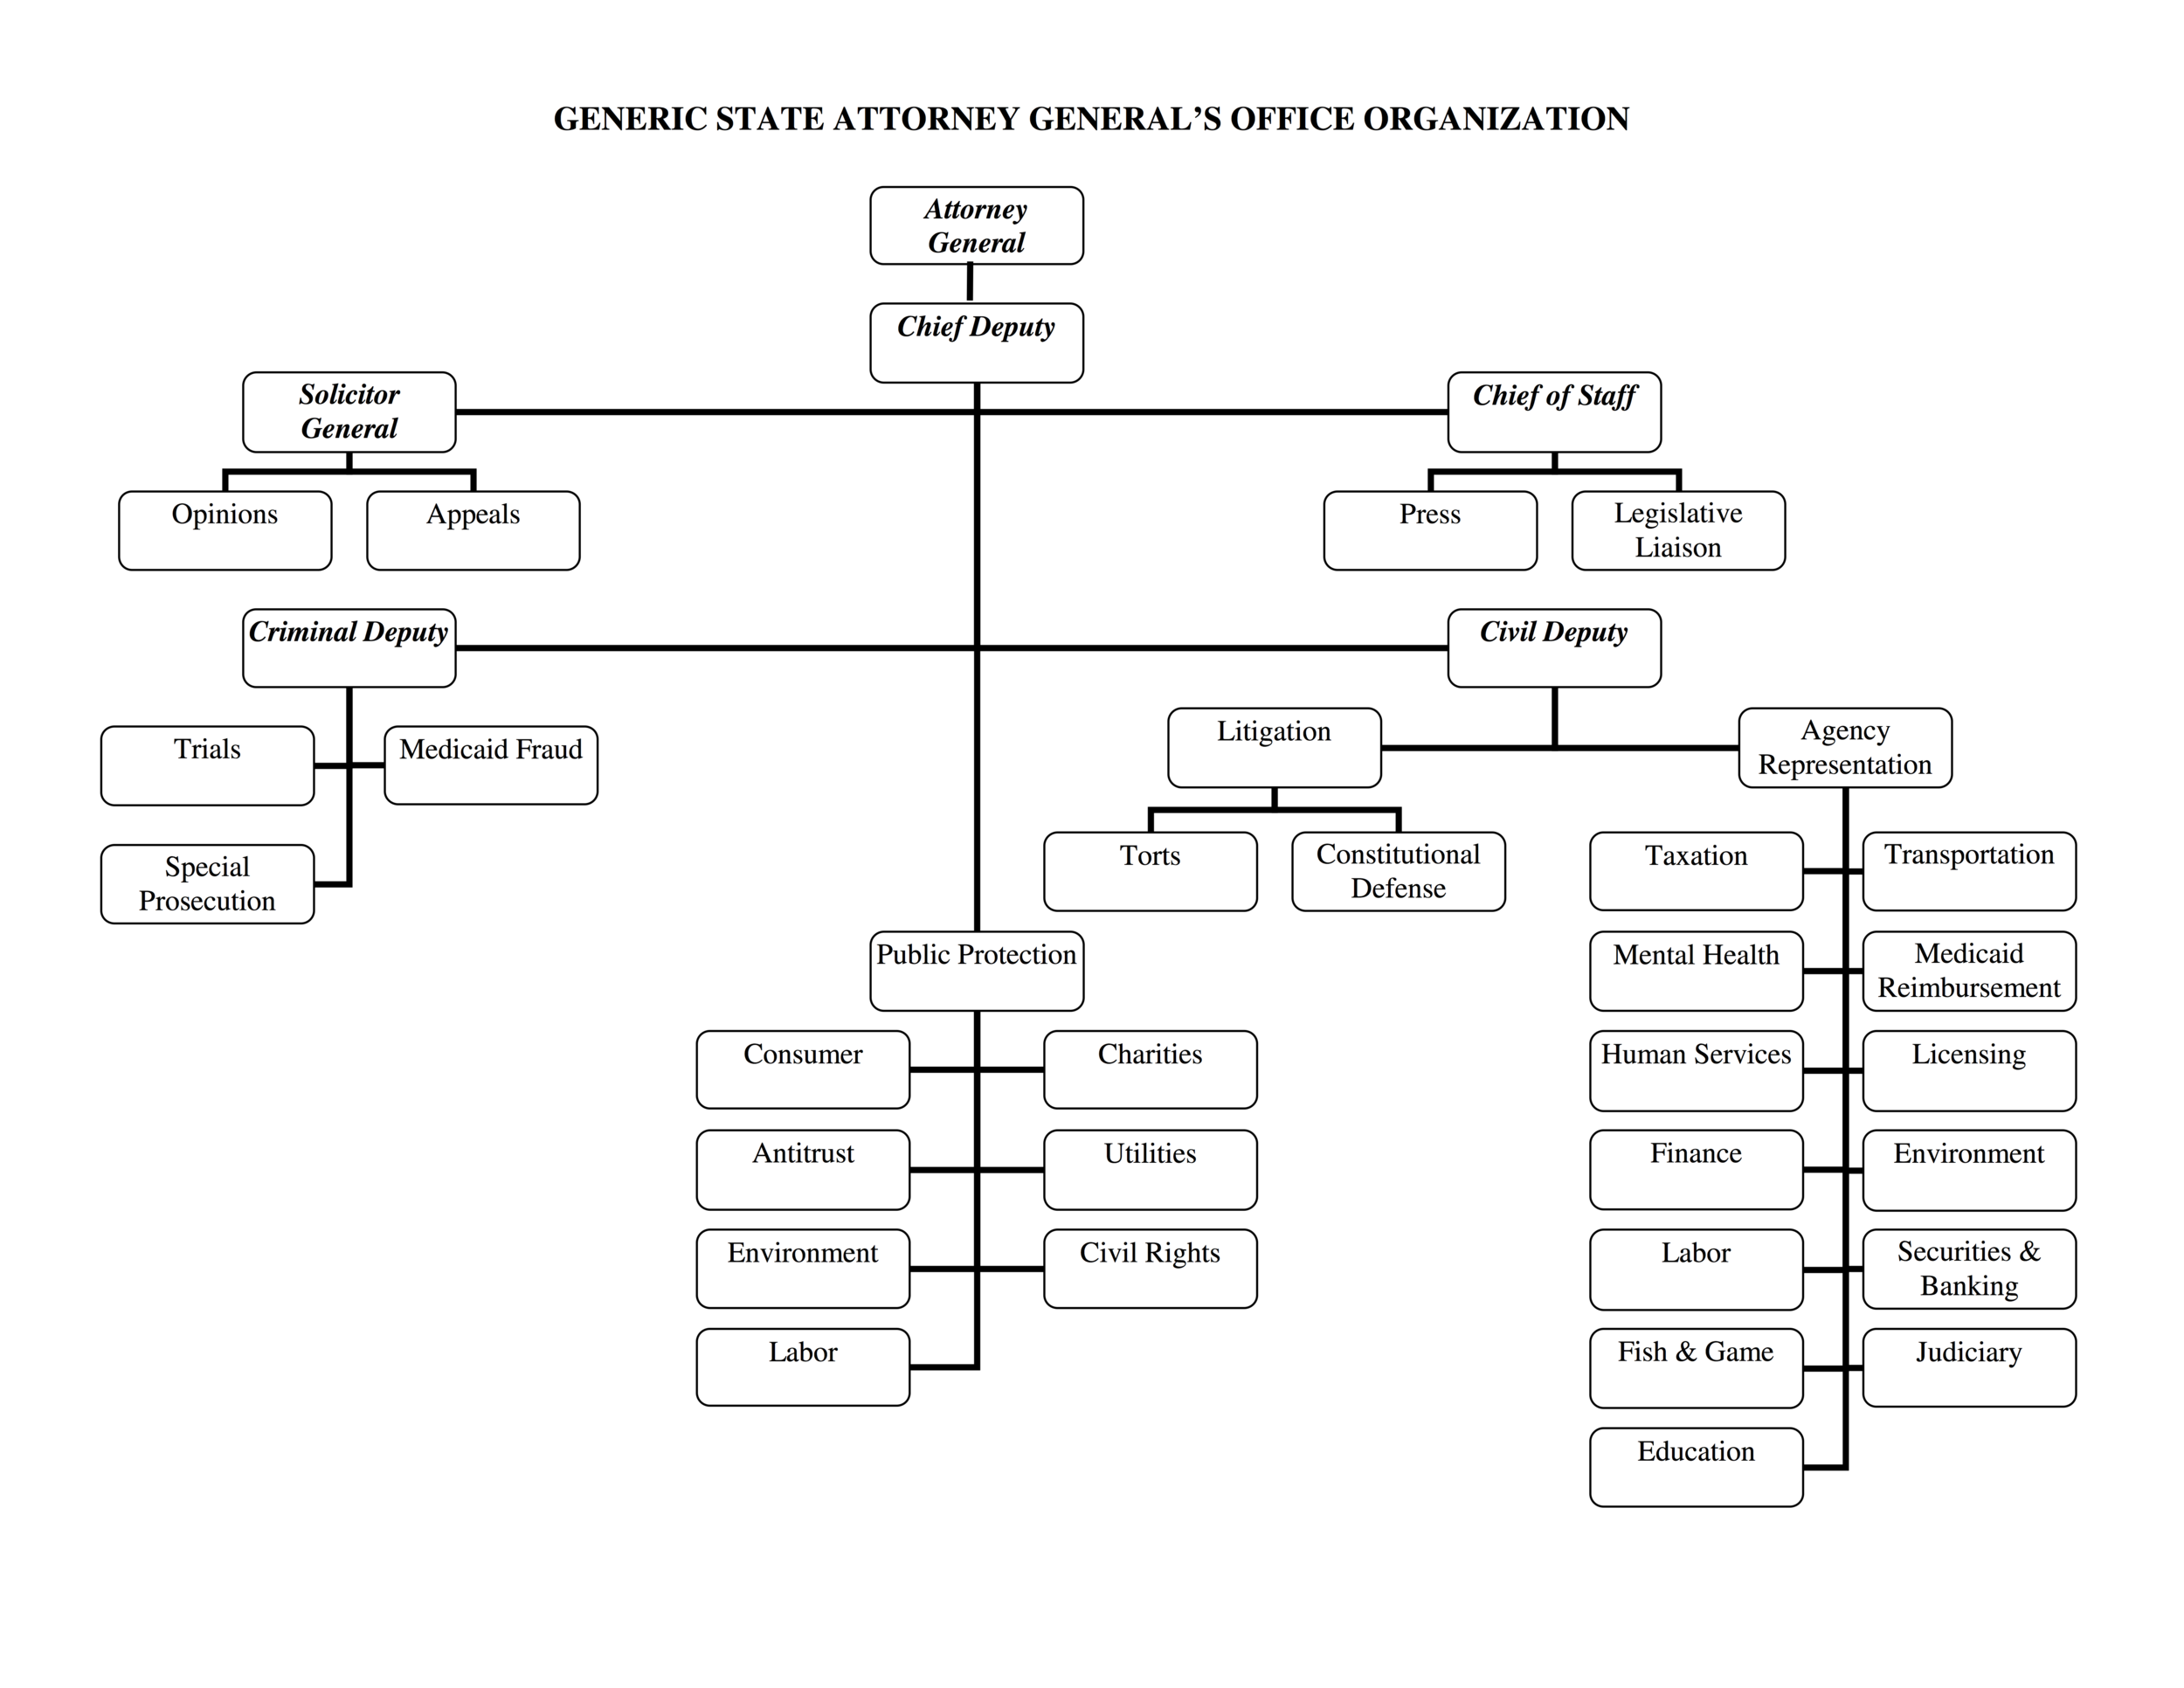 Indiana State Government Organizational Chart